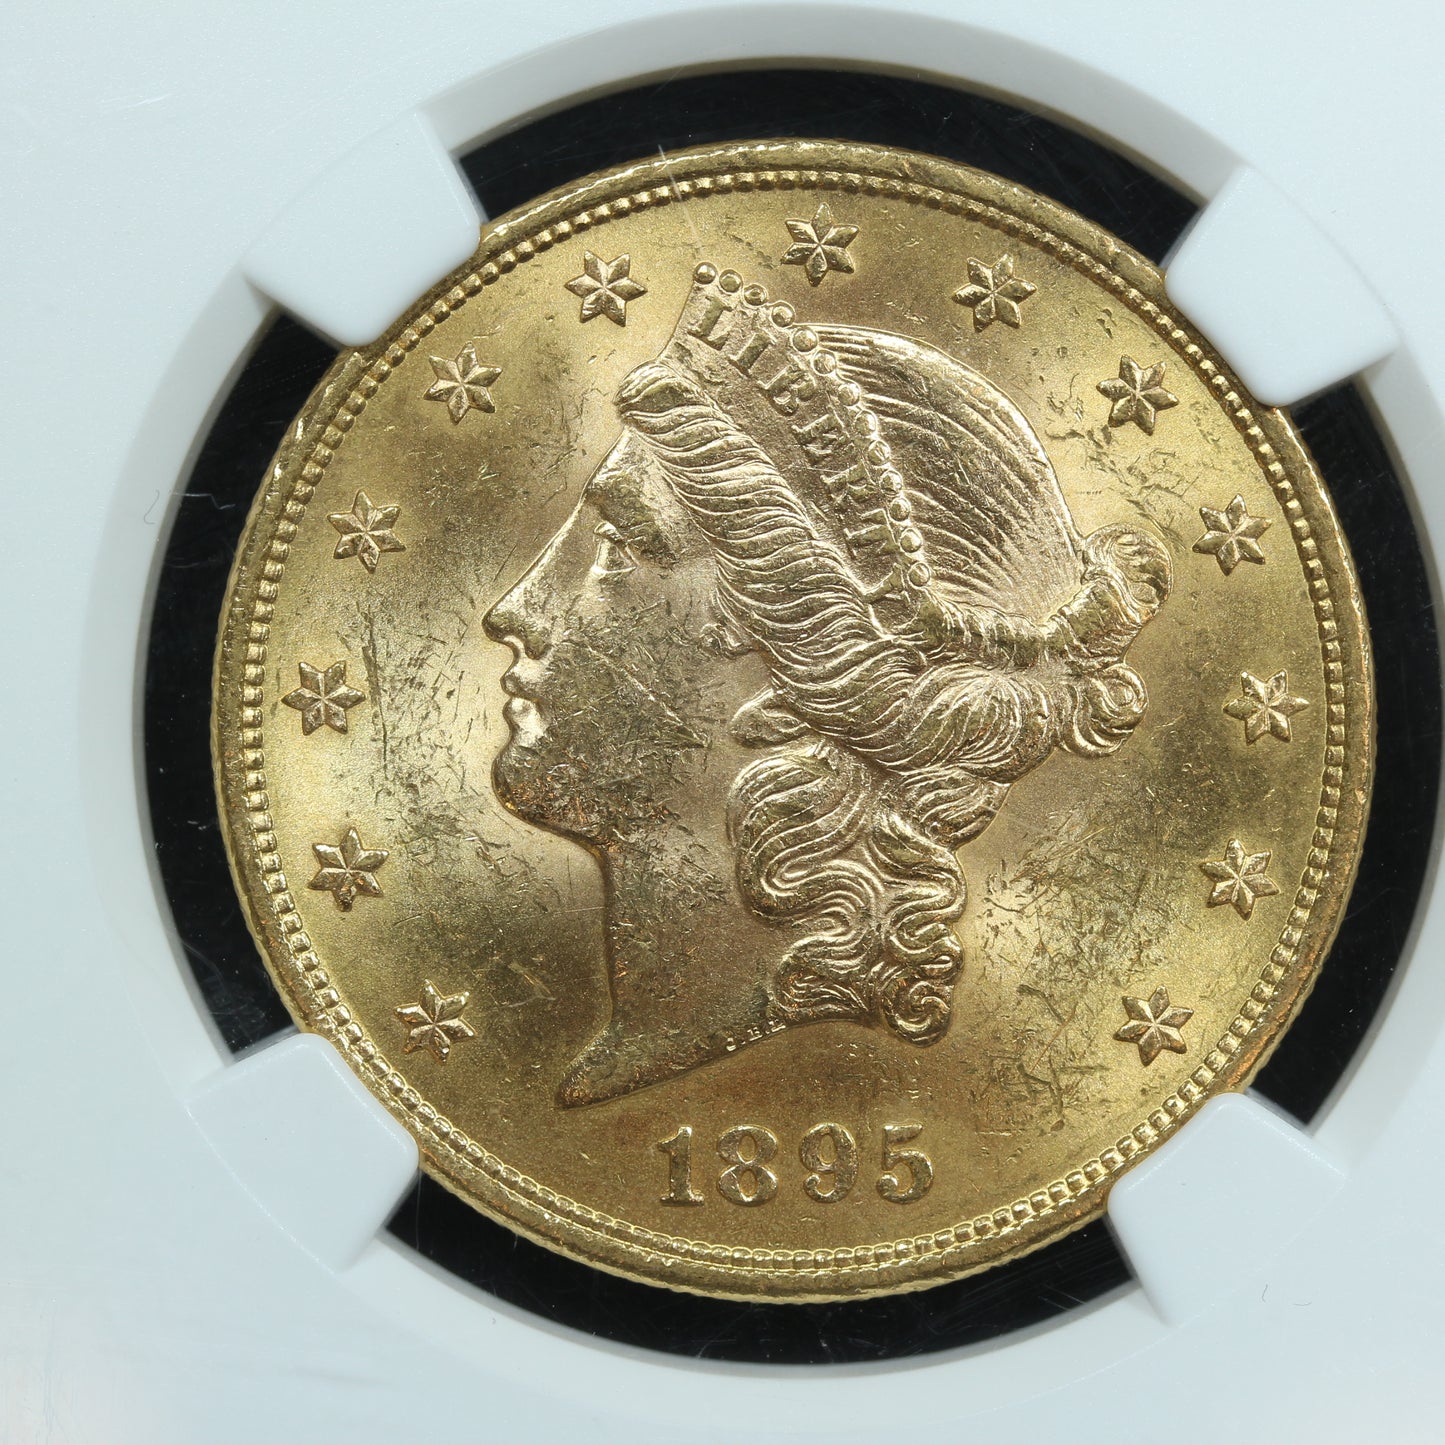 1895 (Philadelphia) $20 Gold Liberty Head Double Eagle Coin - NGC MS 61